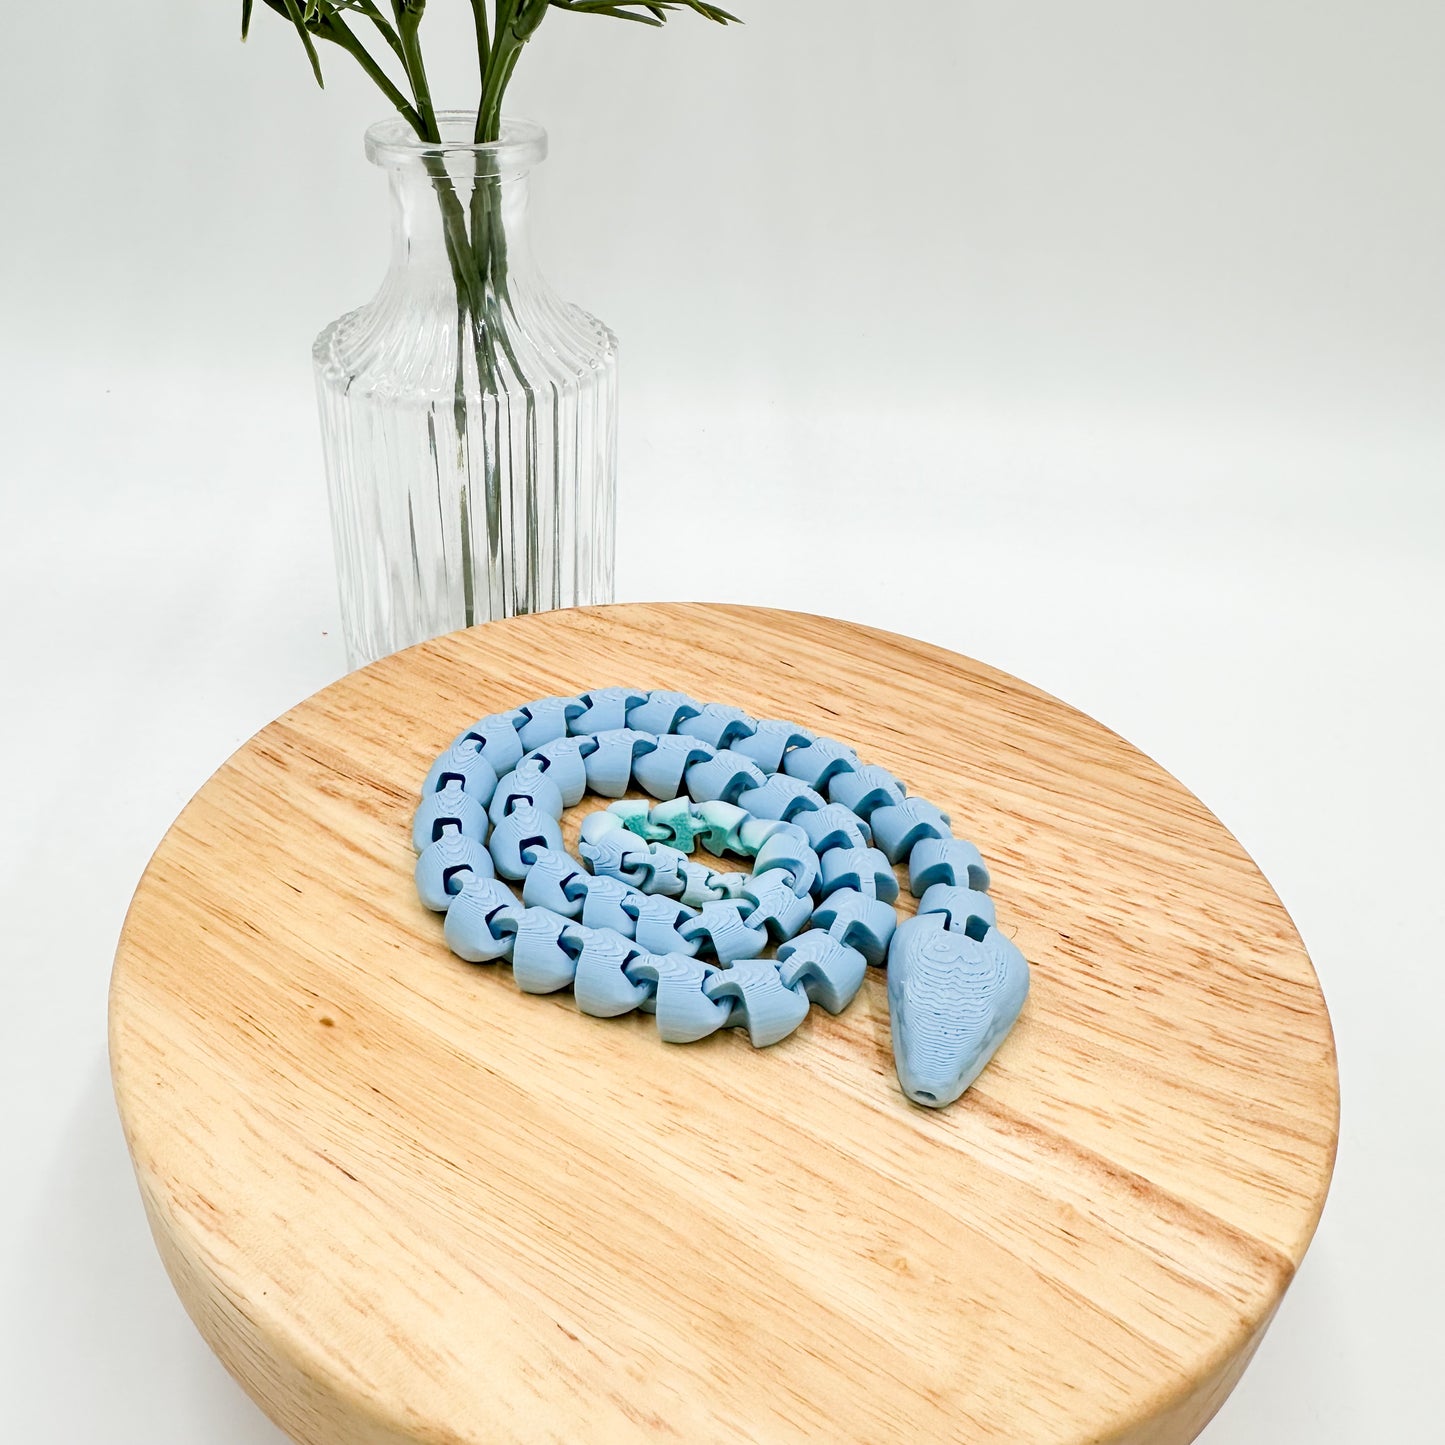 3D Printed Articulating Snake Figurine